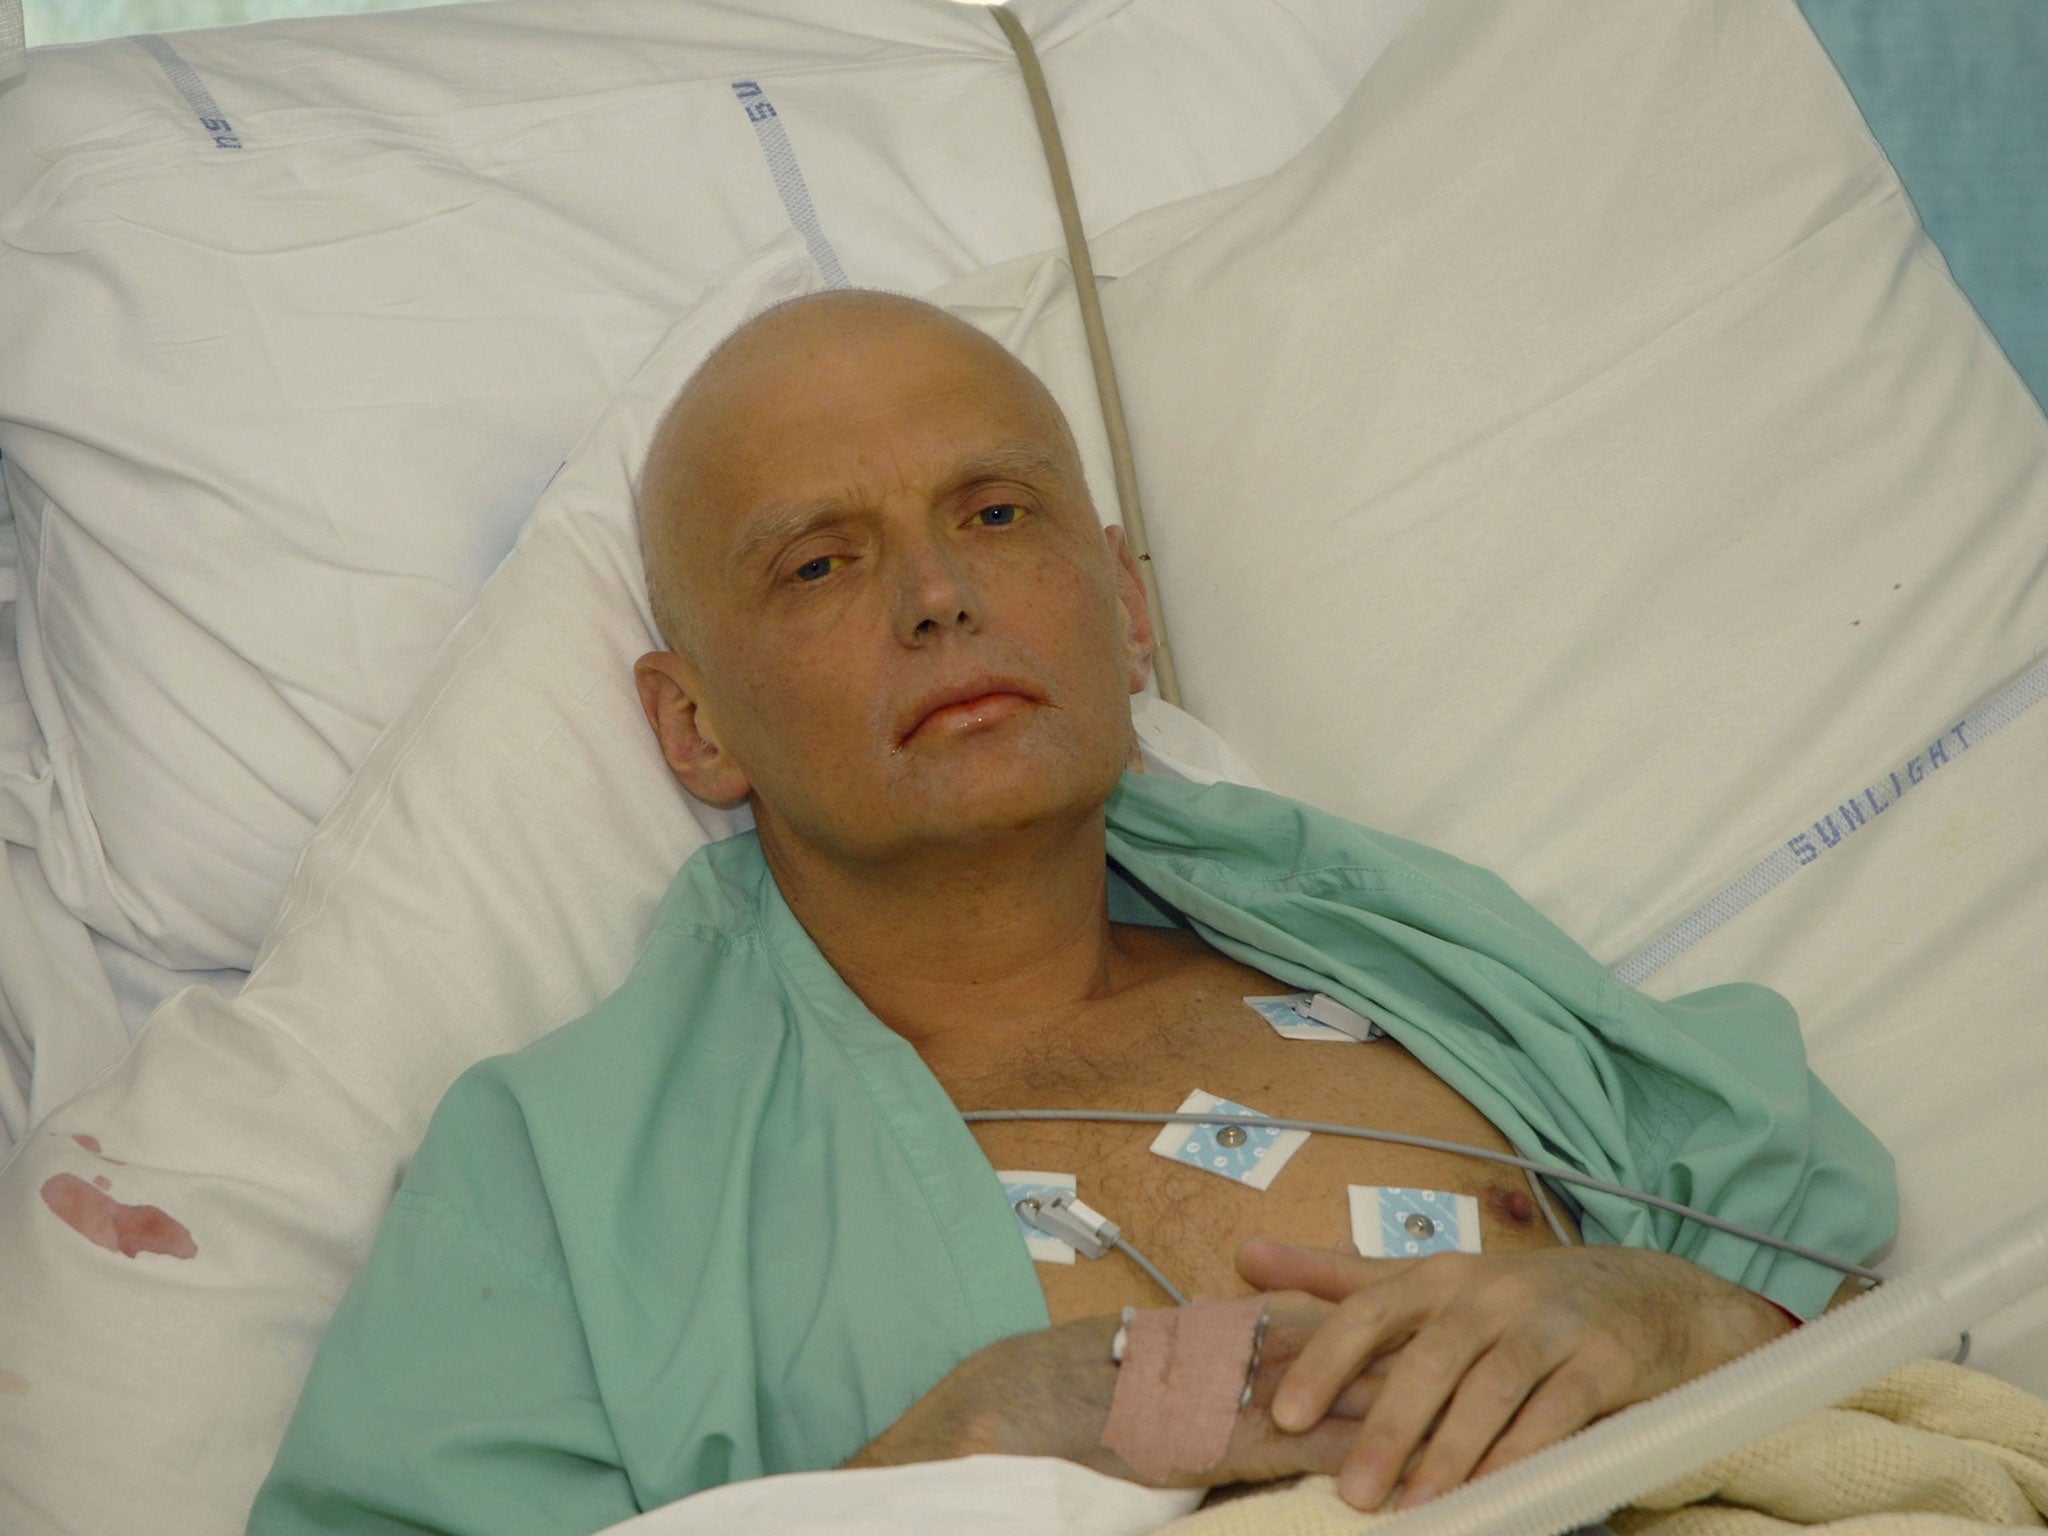 Former FSB officer Alexander Litvinenko was murdered using radioactive polonium-210 in 2006